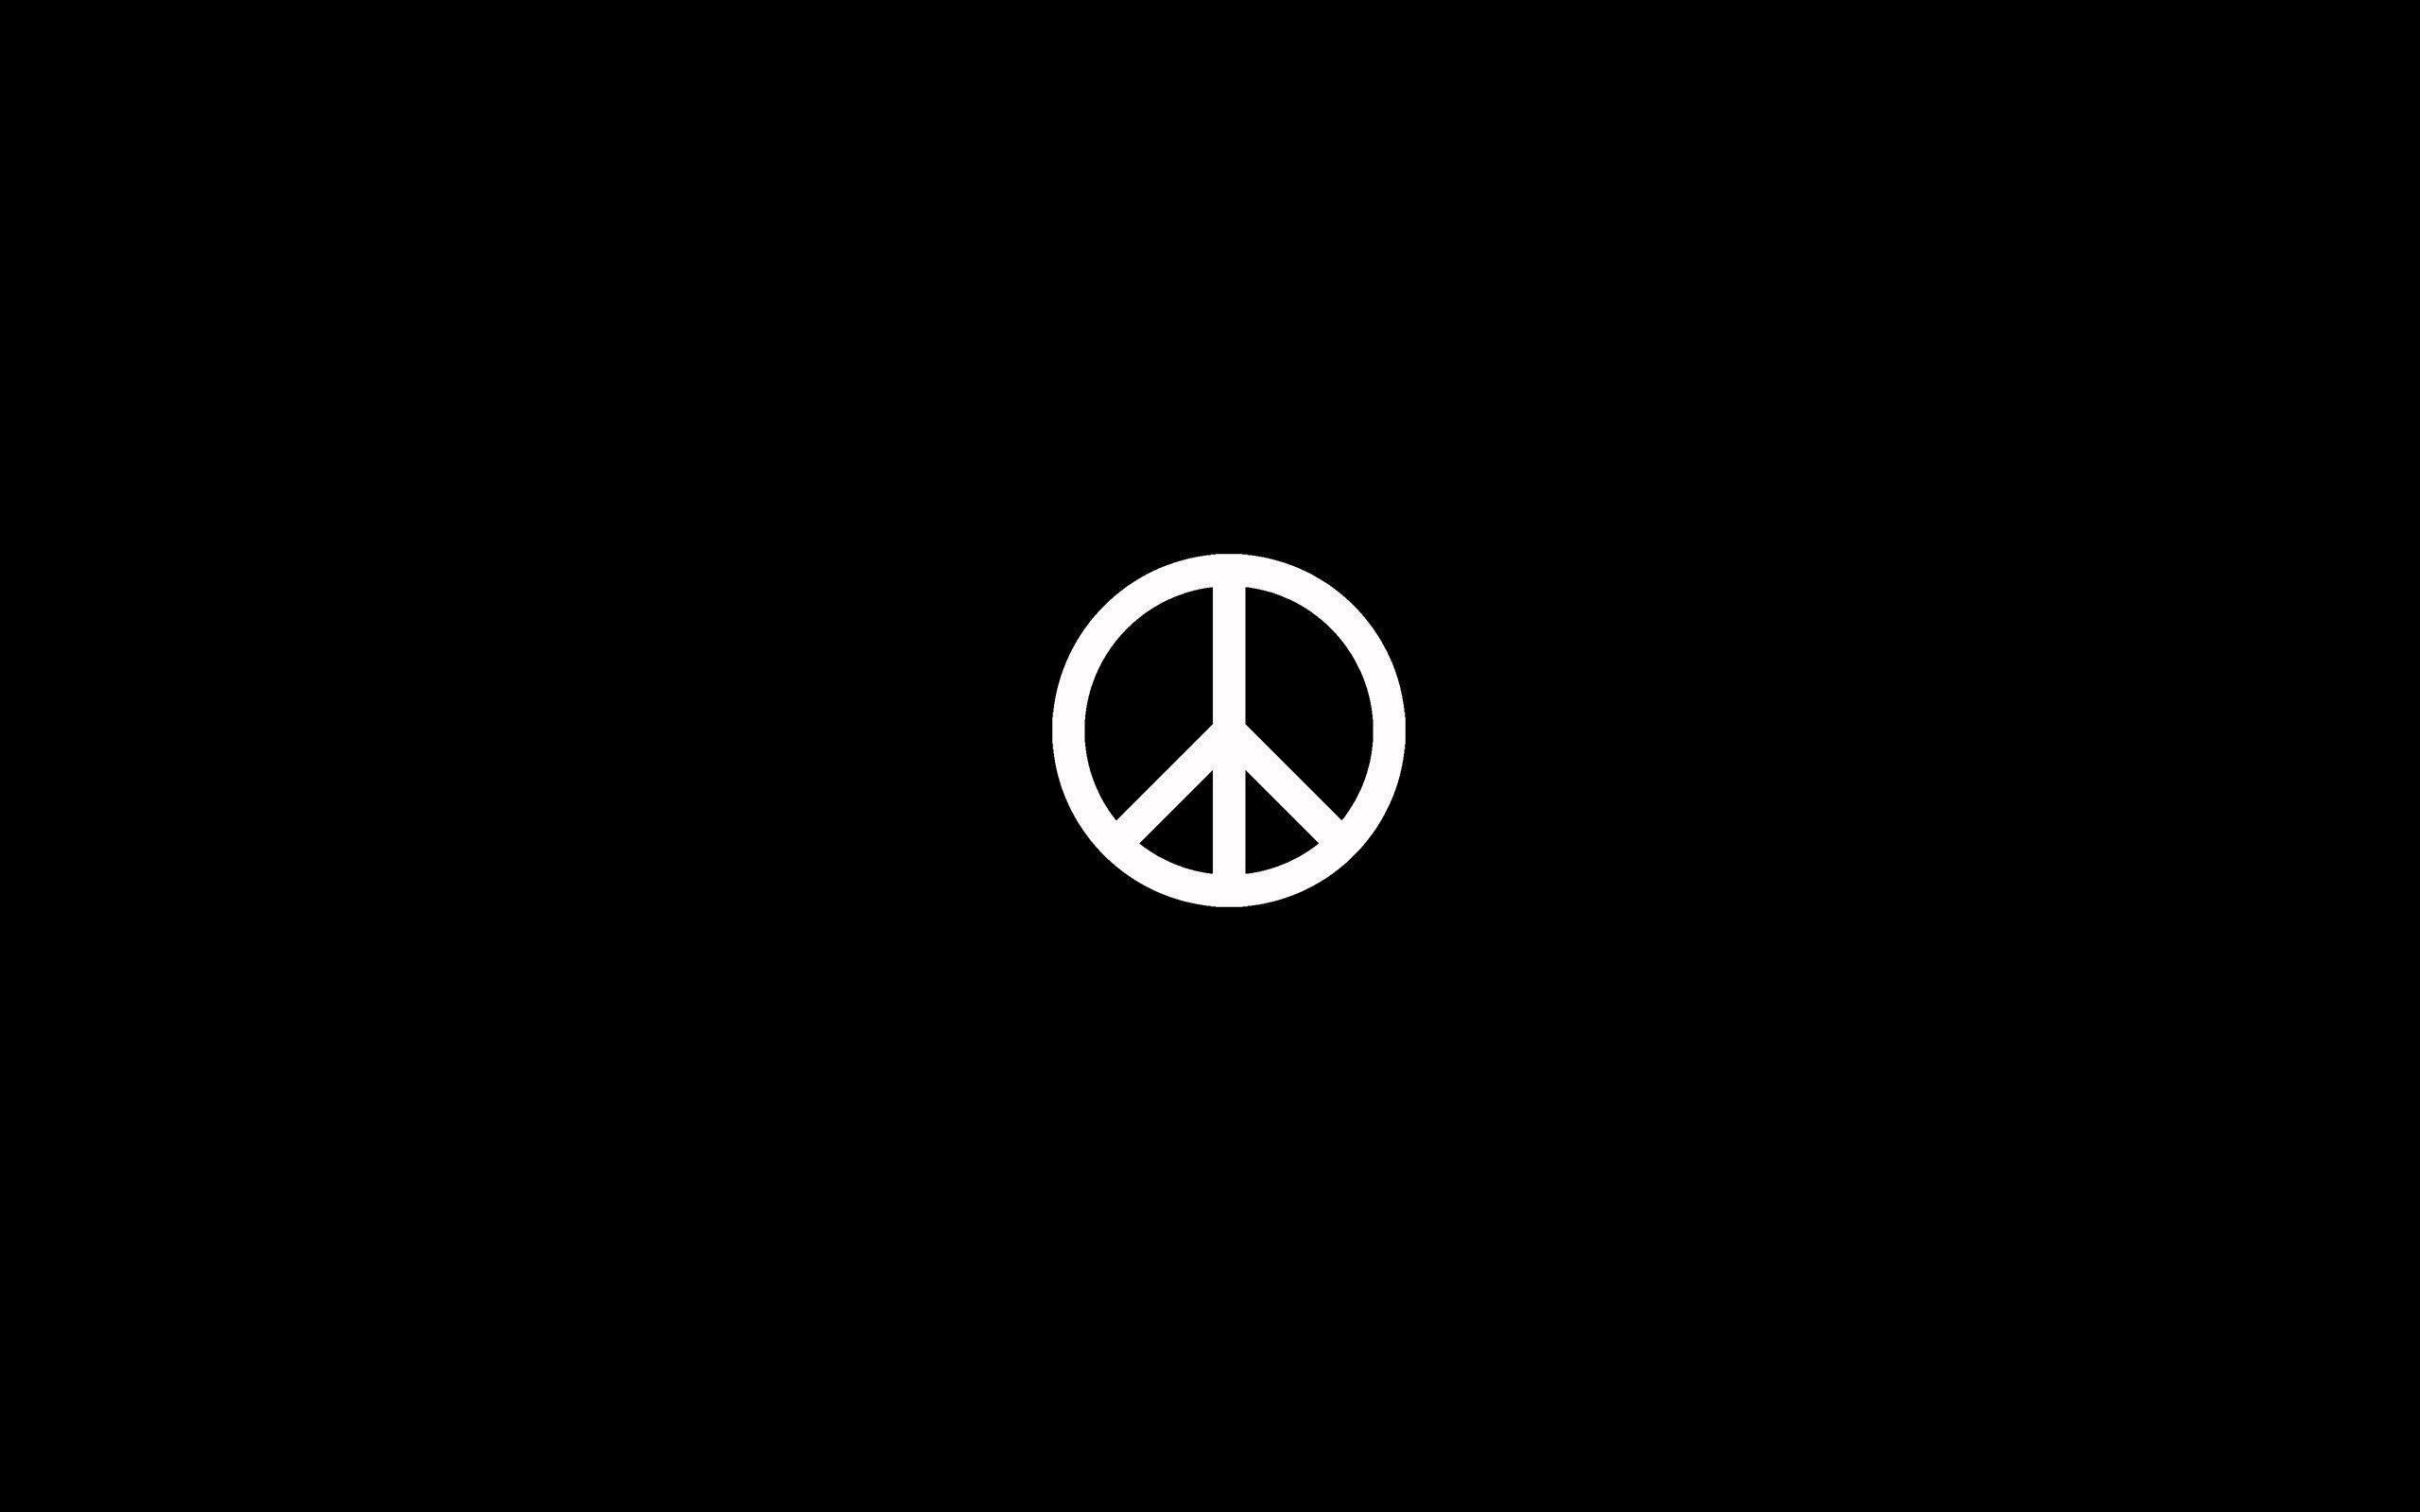 peace sign backgrounds for desktop